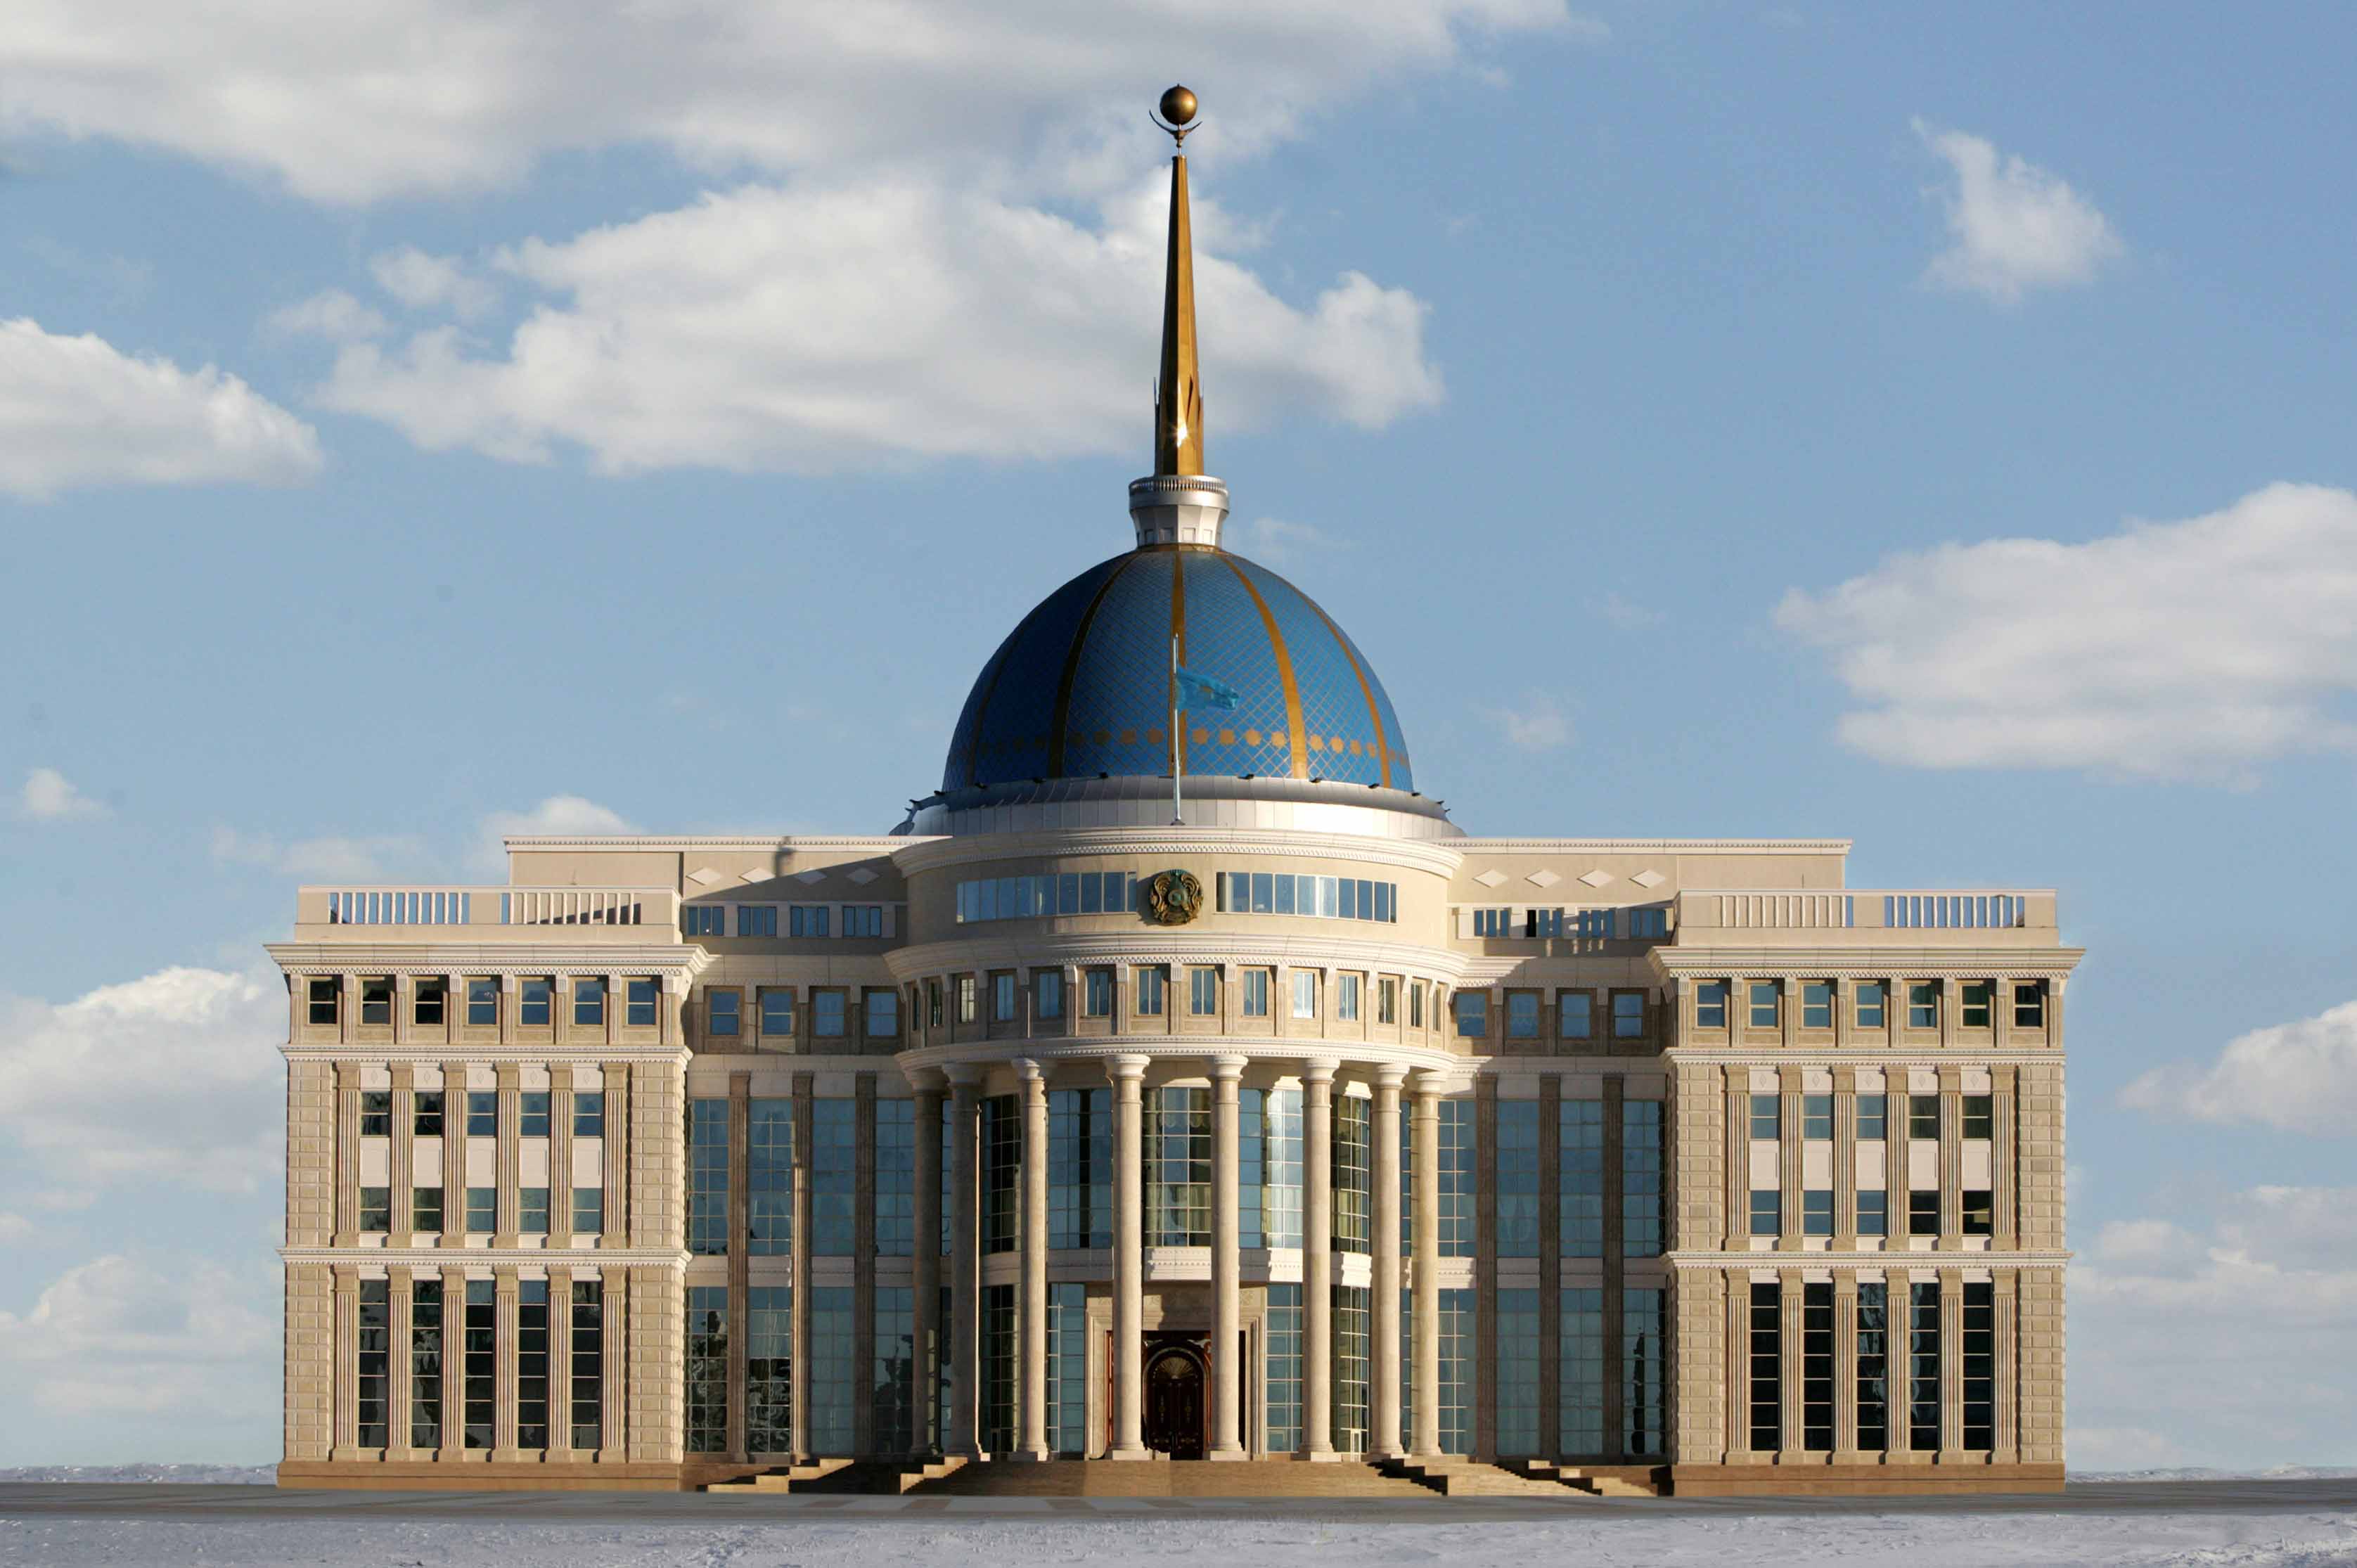 Nazarbayev had a telephone conversation with Putin